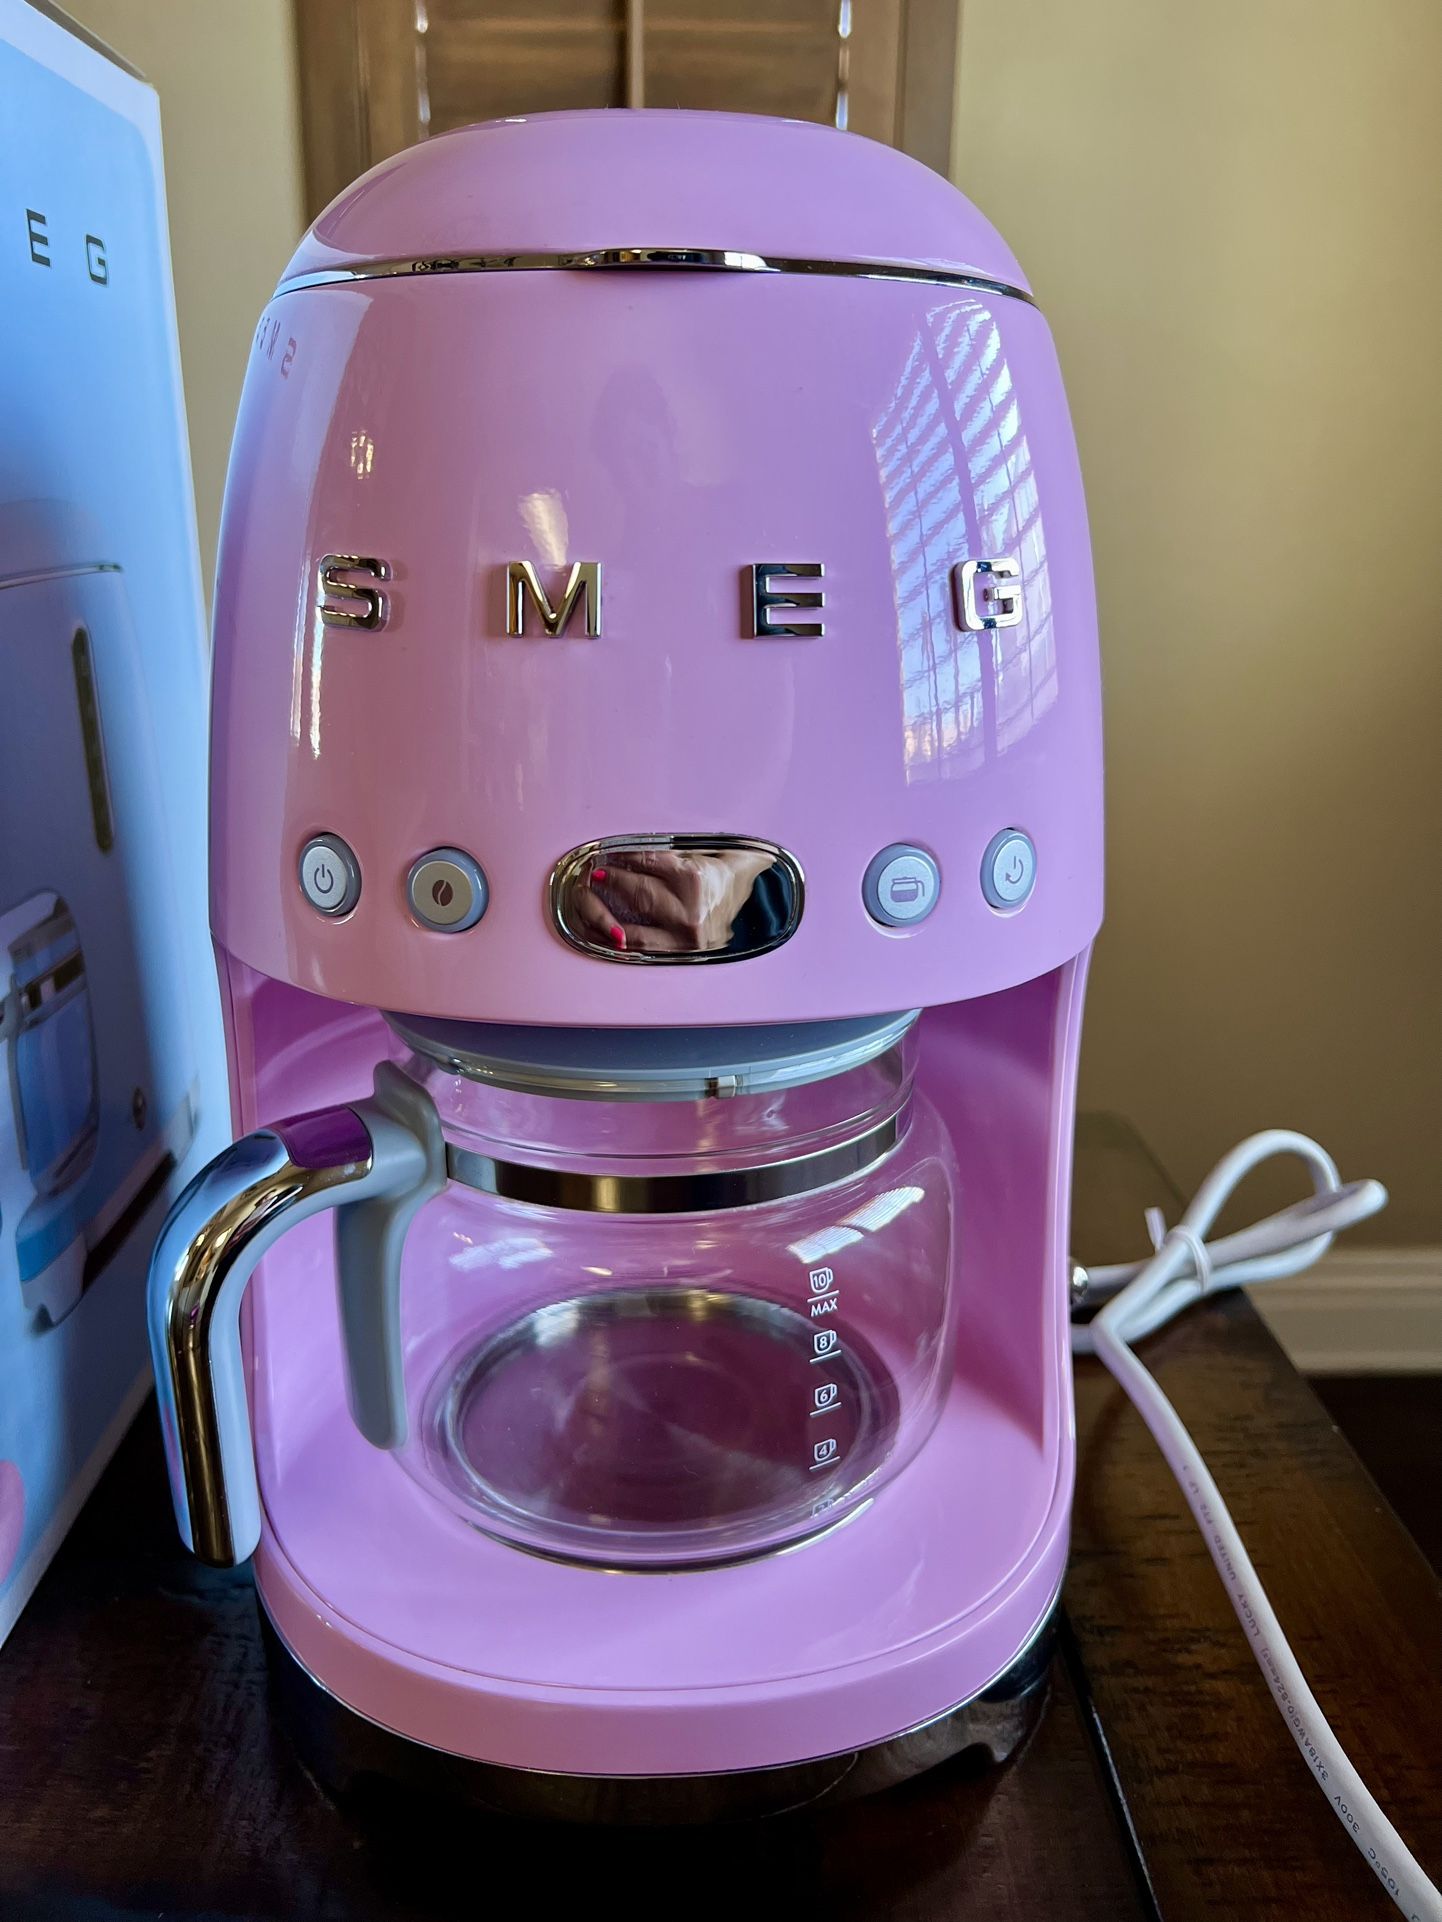 Smeg Drip Filter Coffee Machine - Pink